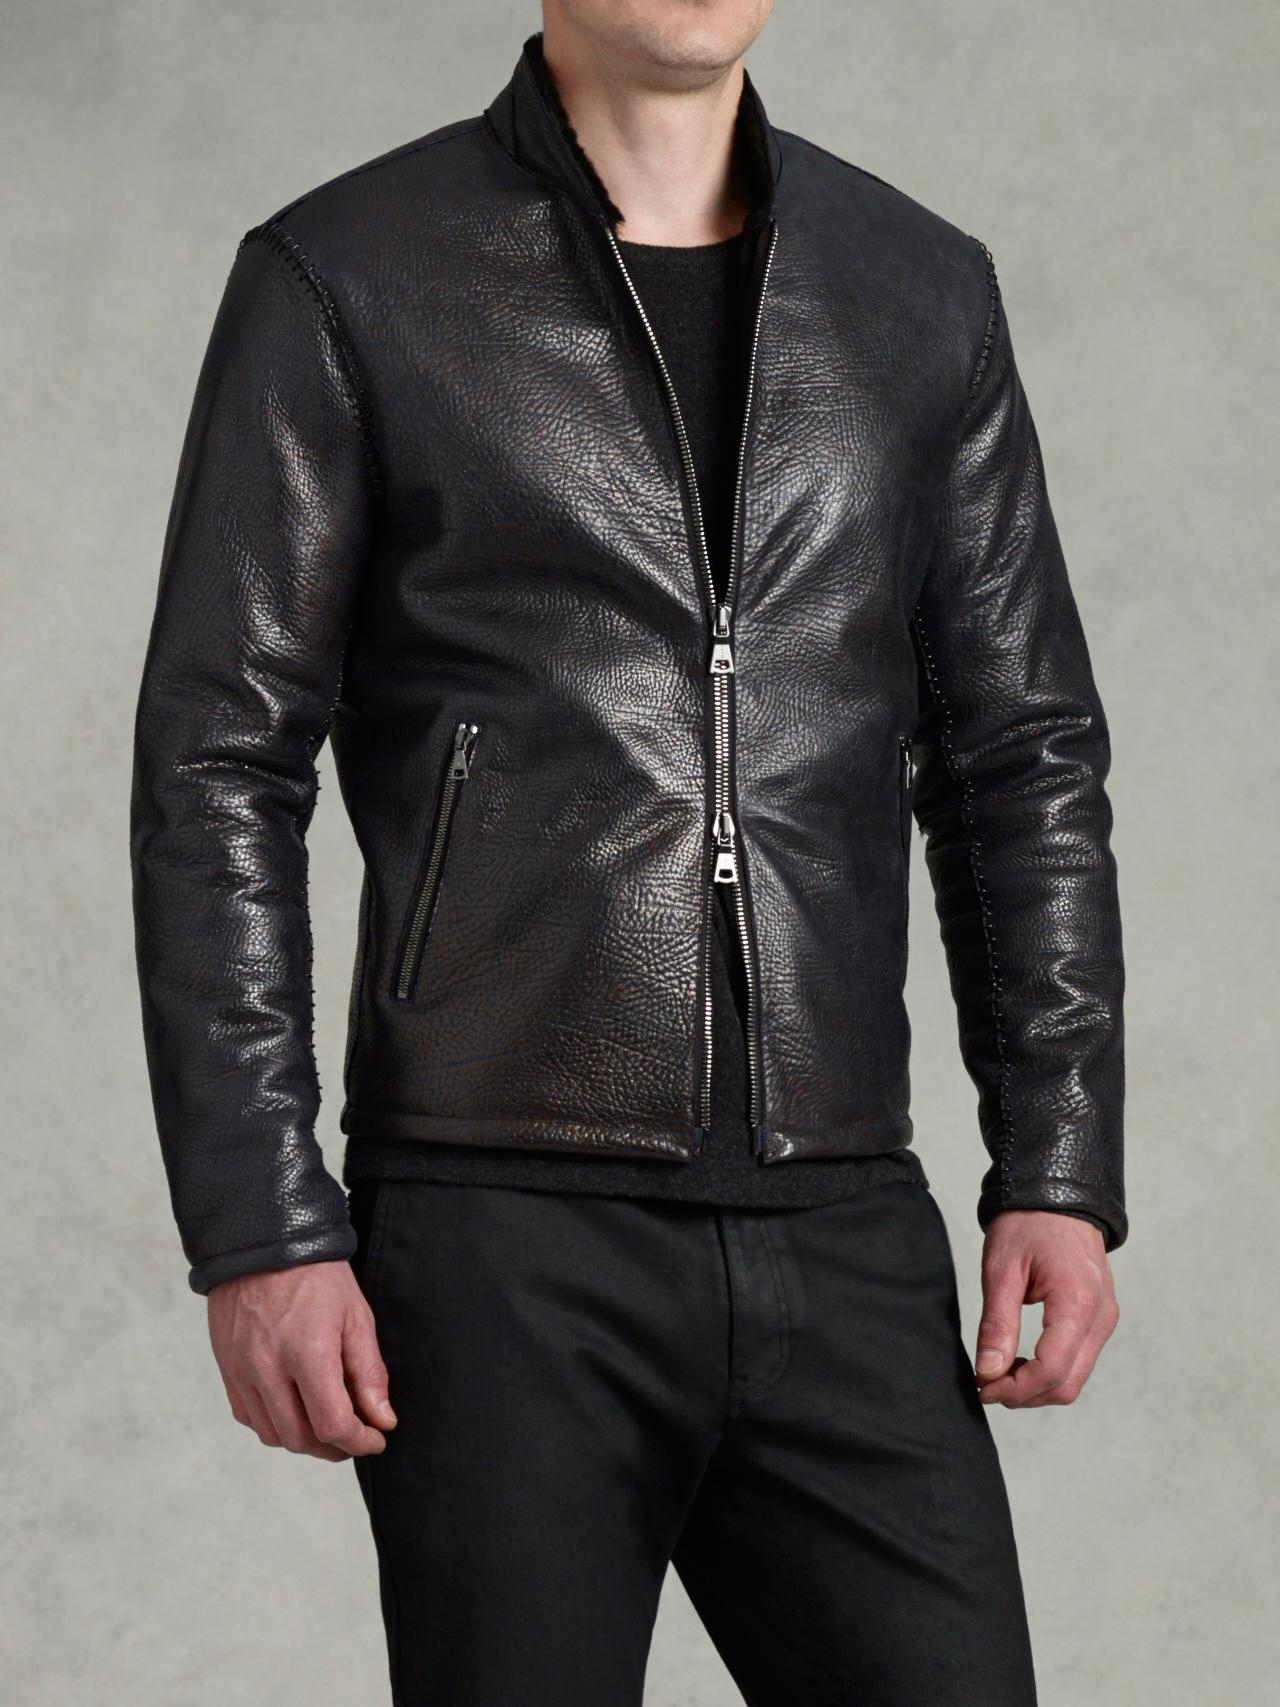 Lyst - John Varvatos Short Shearling Jacket in Black for Men